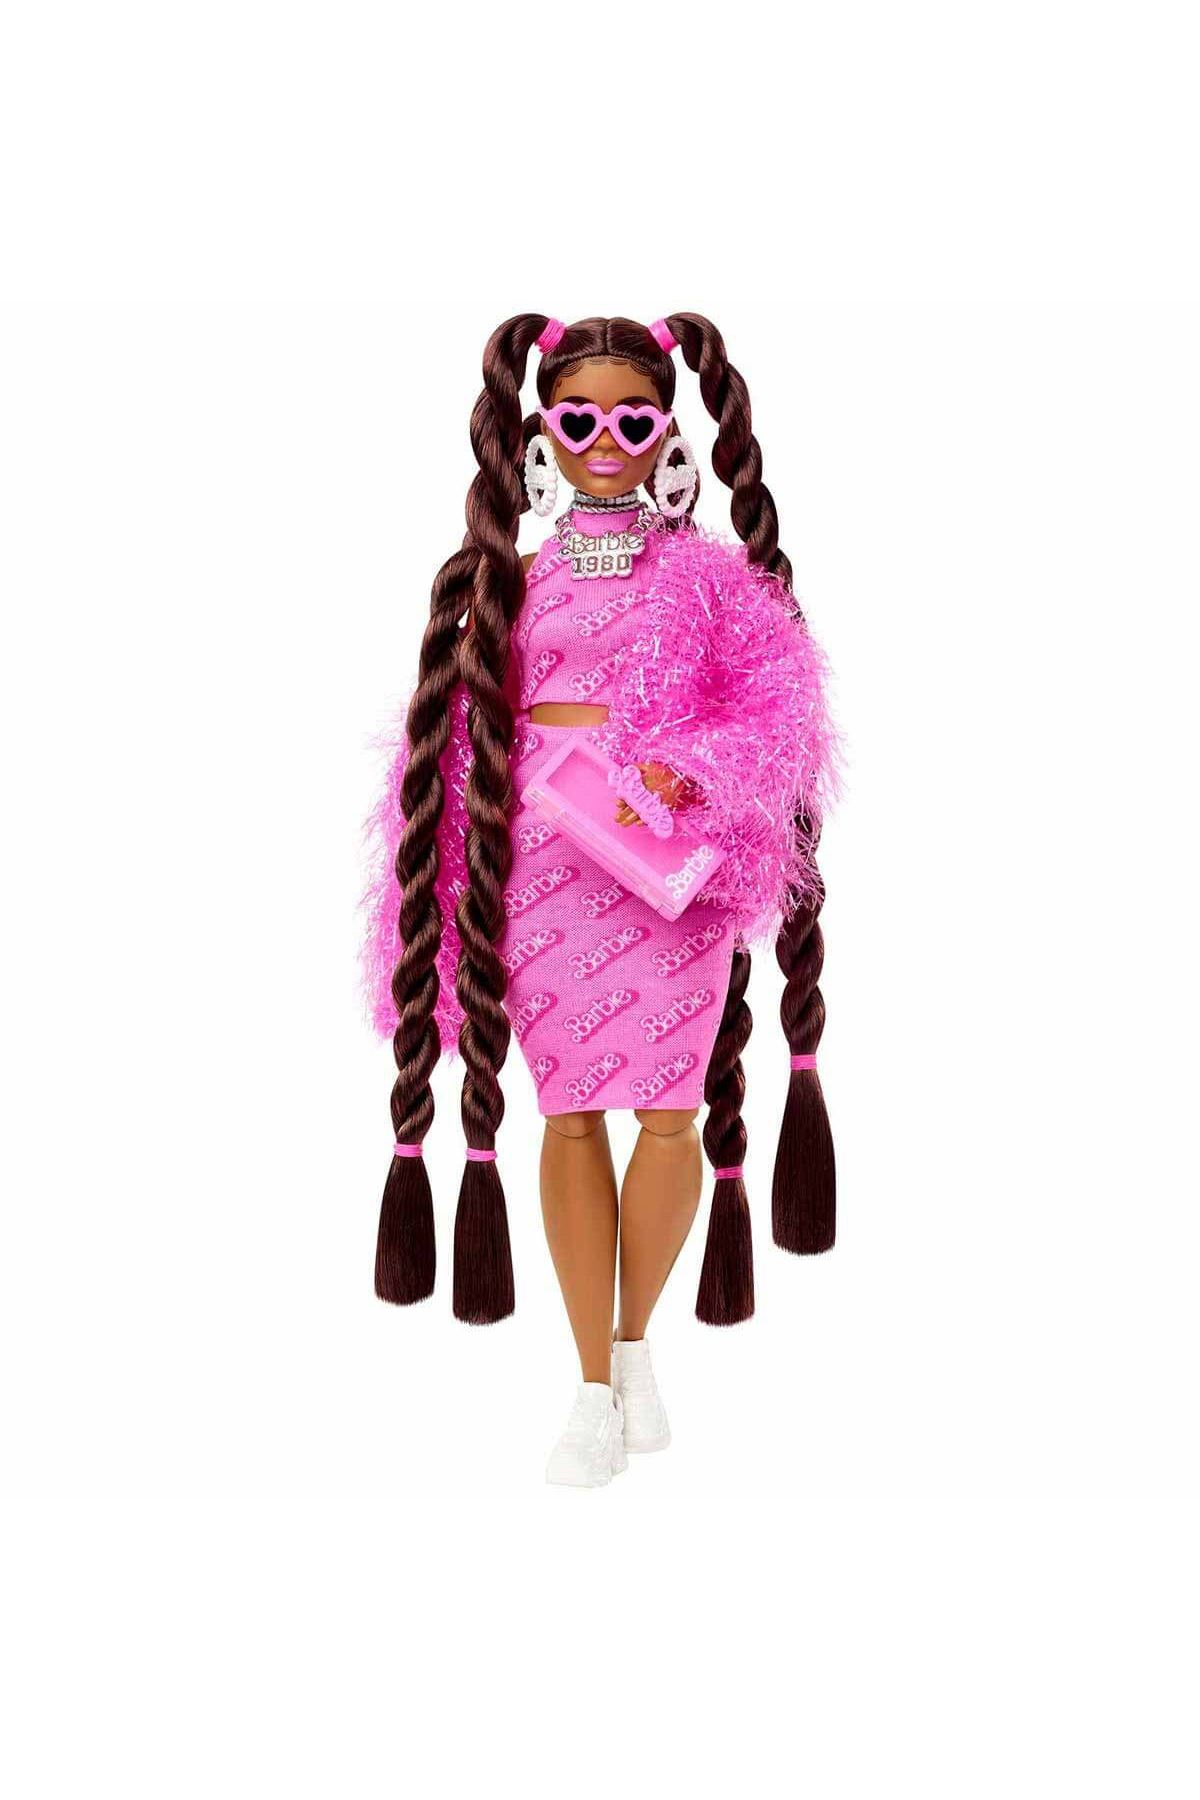 Barbie Extra Ceketli Bebek GRN27 HHN06